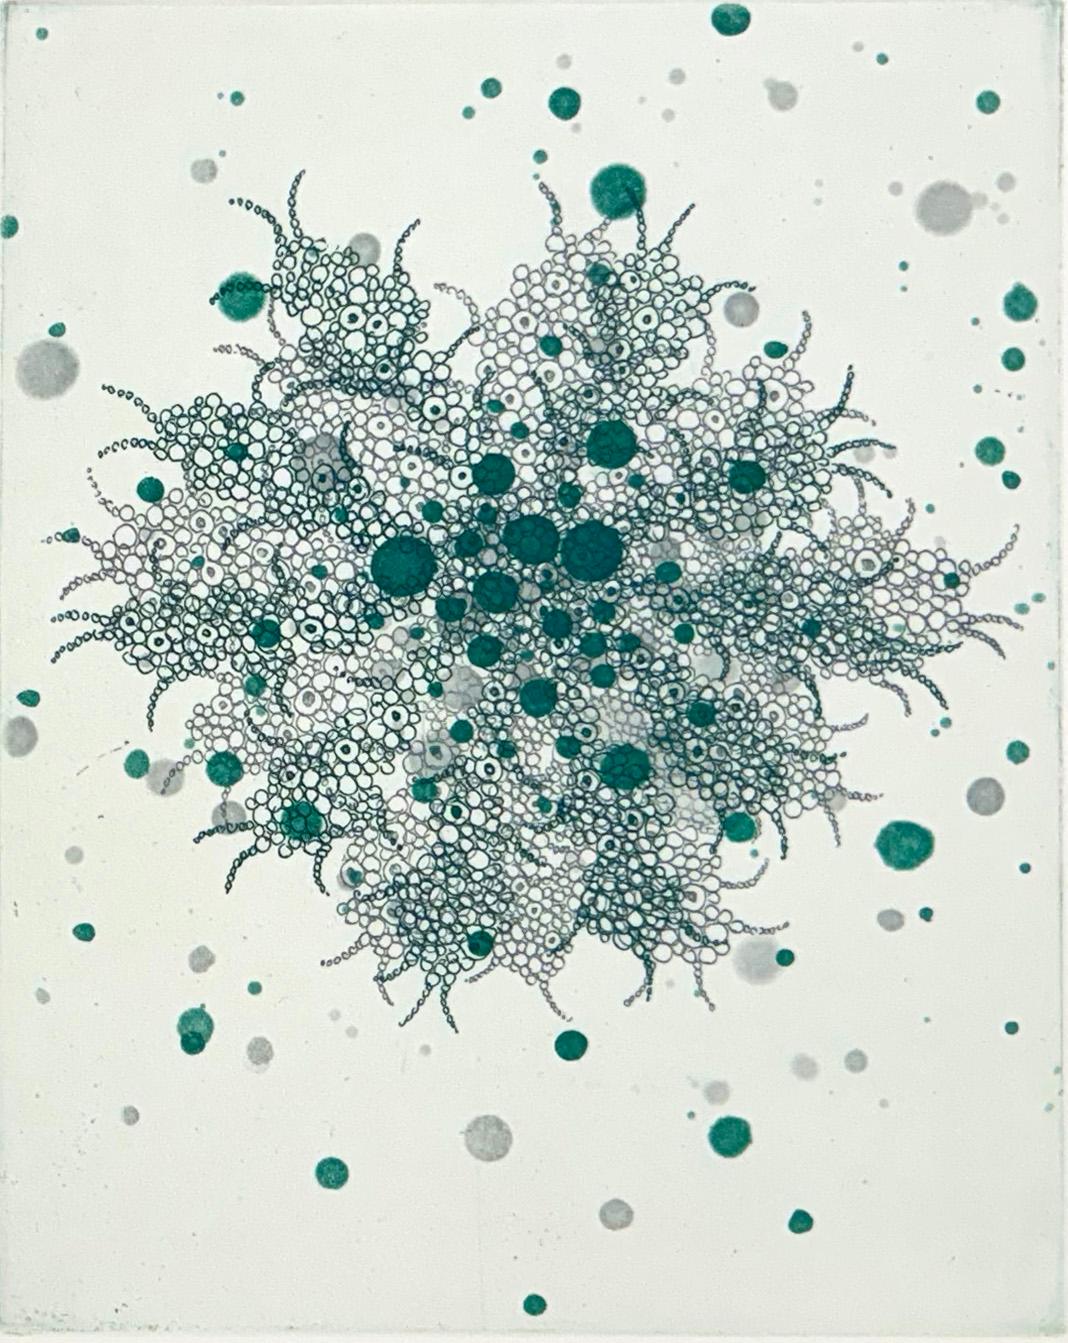 Seiko Tachibana Still-Life Print - fern-butterfly effect  f-1